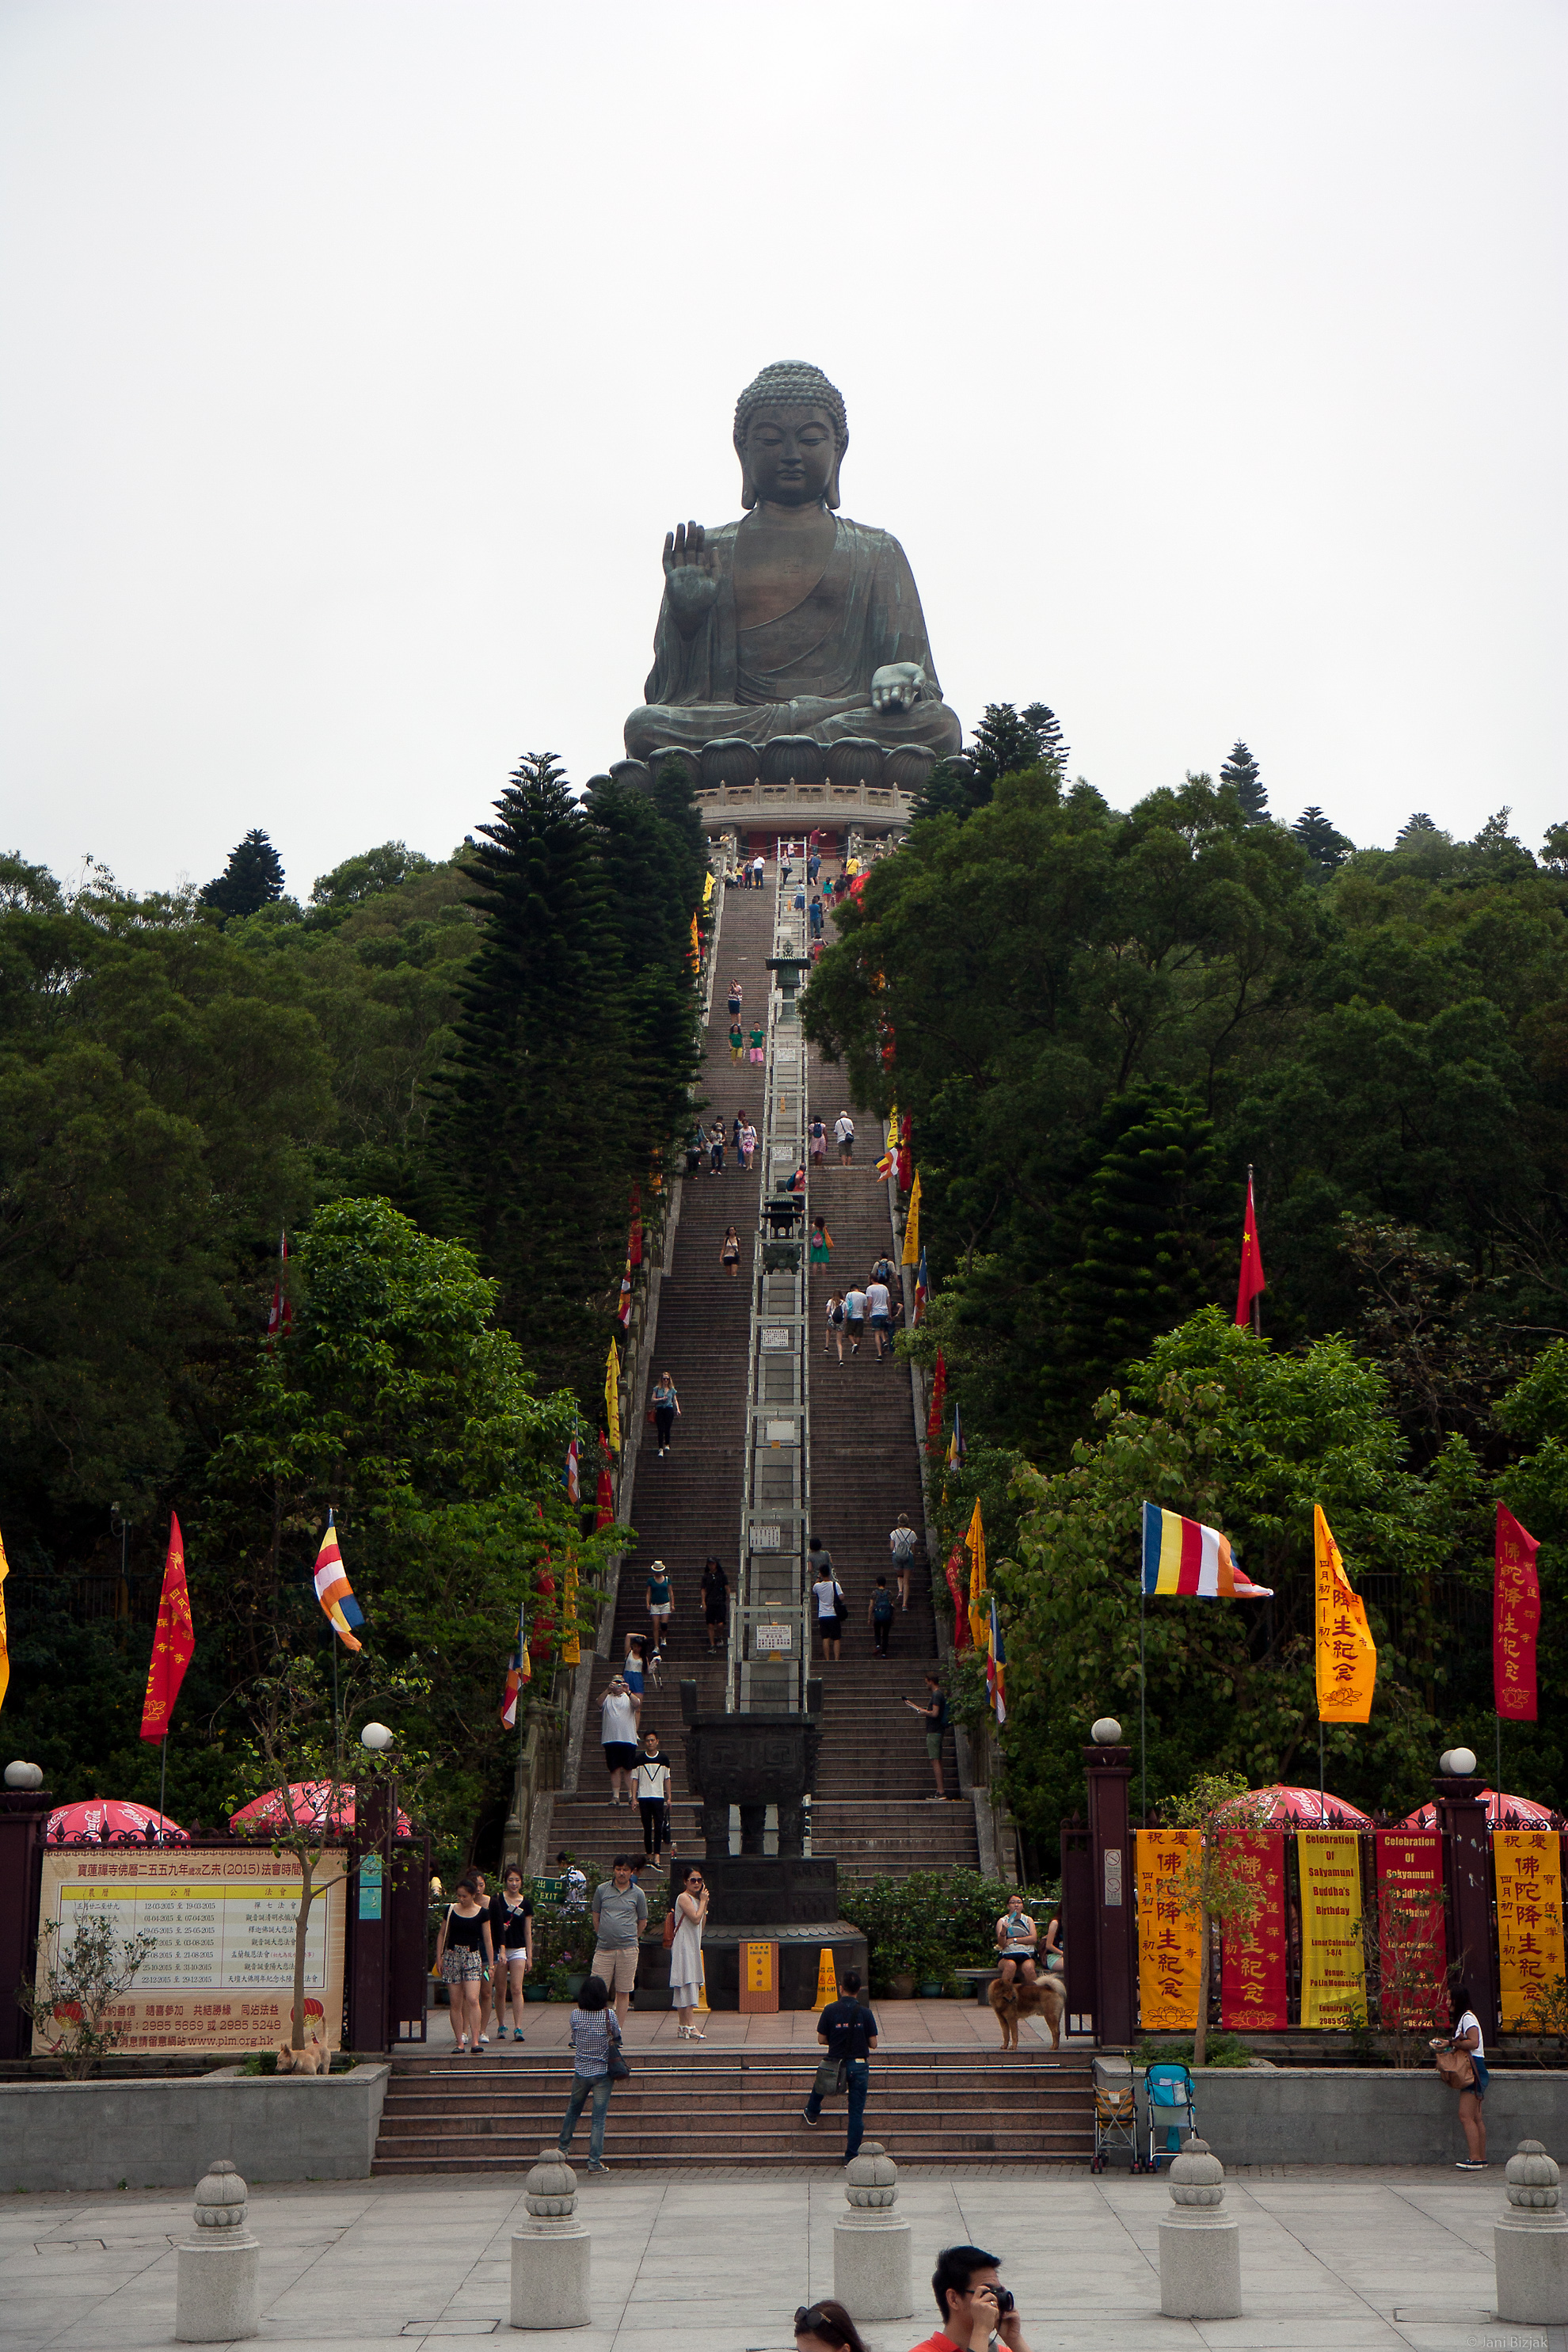 270 steps to the big Buddha